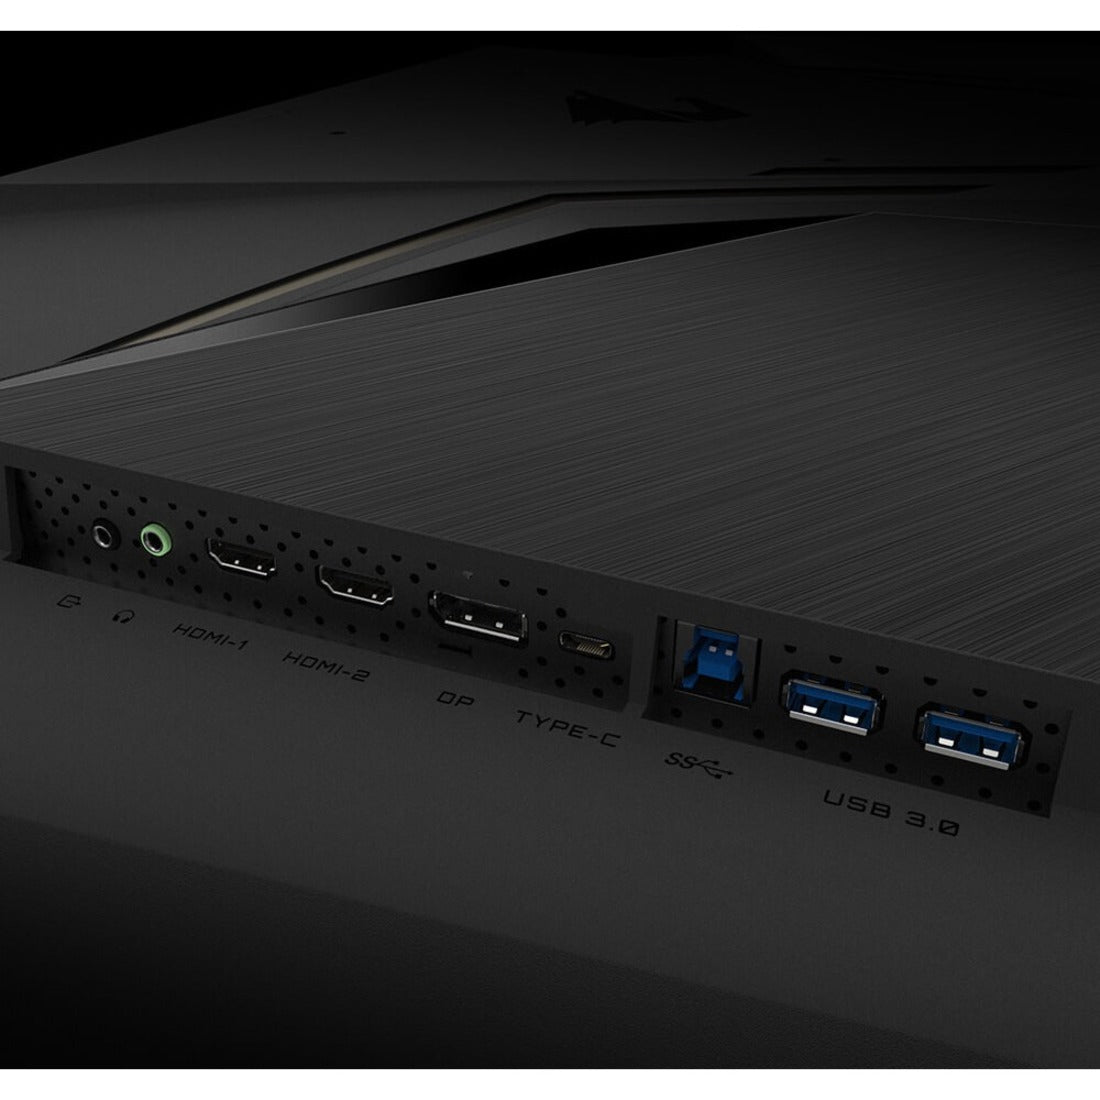 Aorus AORUS FV43U-SA FV43U Gaming Monitor, 43" 4K QLED FreeSync Premium Pro Monitor with HDR, HDMI, DisplayPort, USB, Black